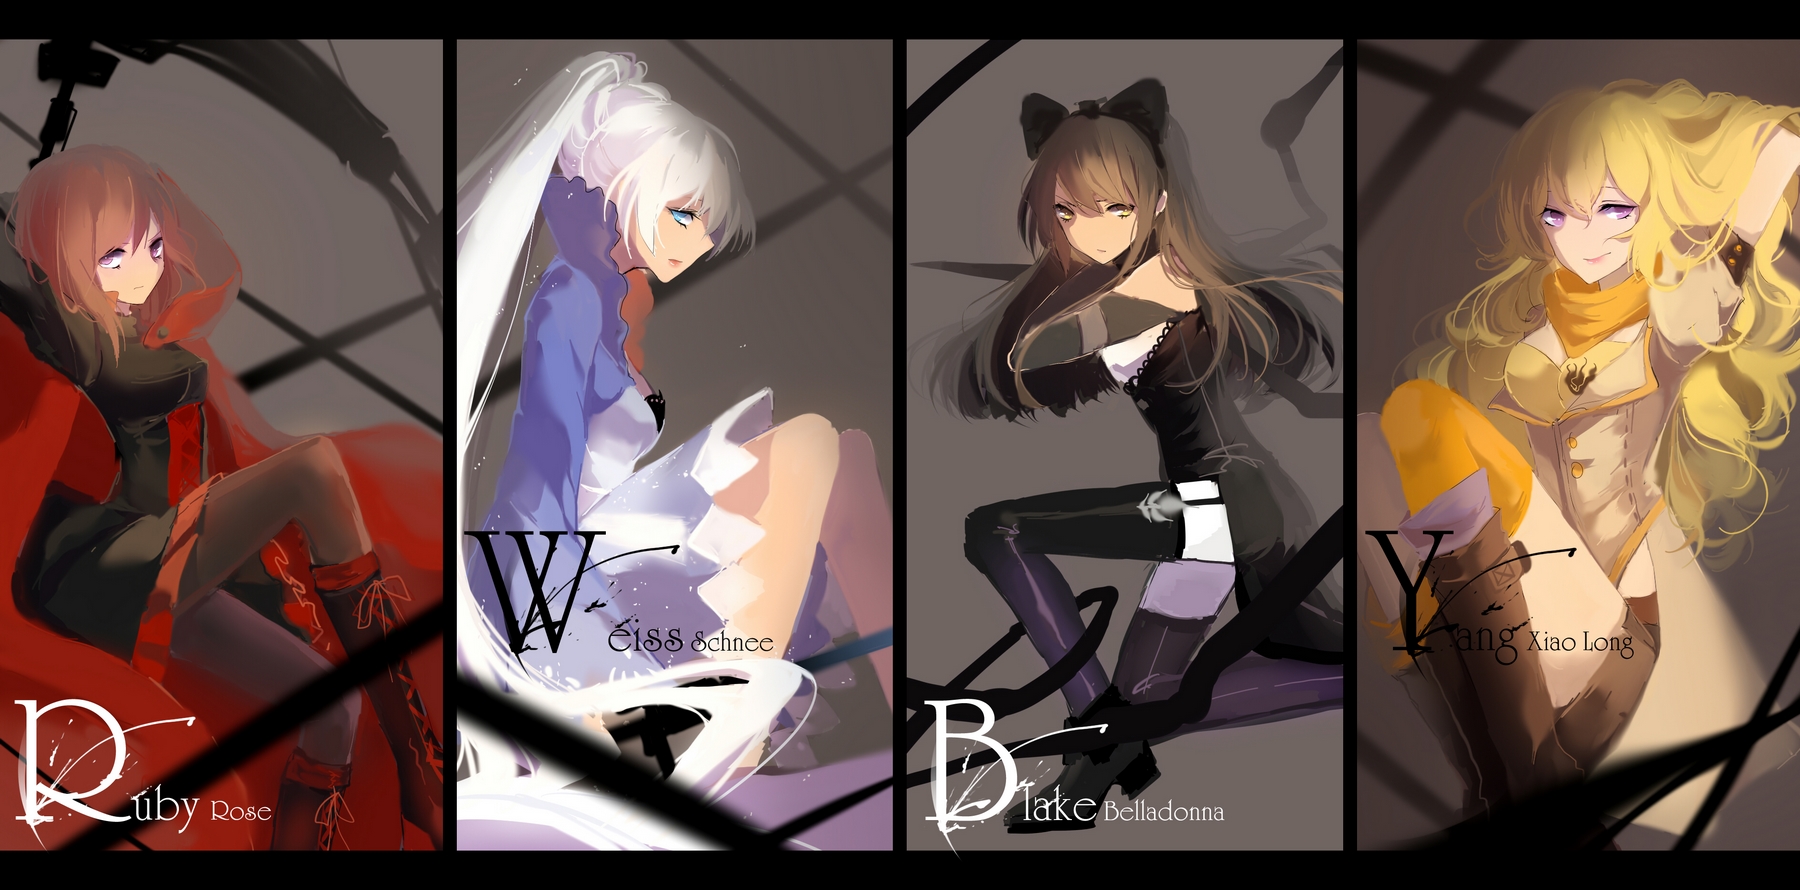 Anime RWBY HD Wallpaper | Background Image